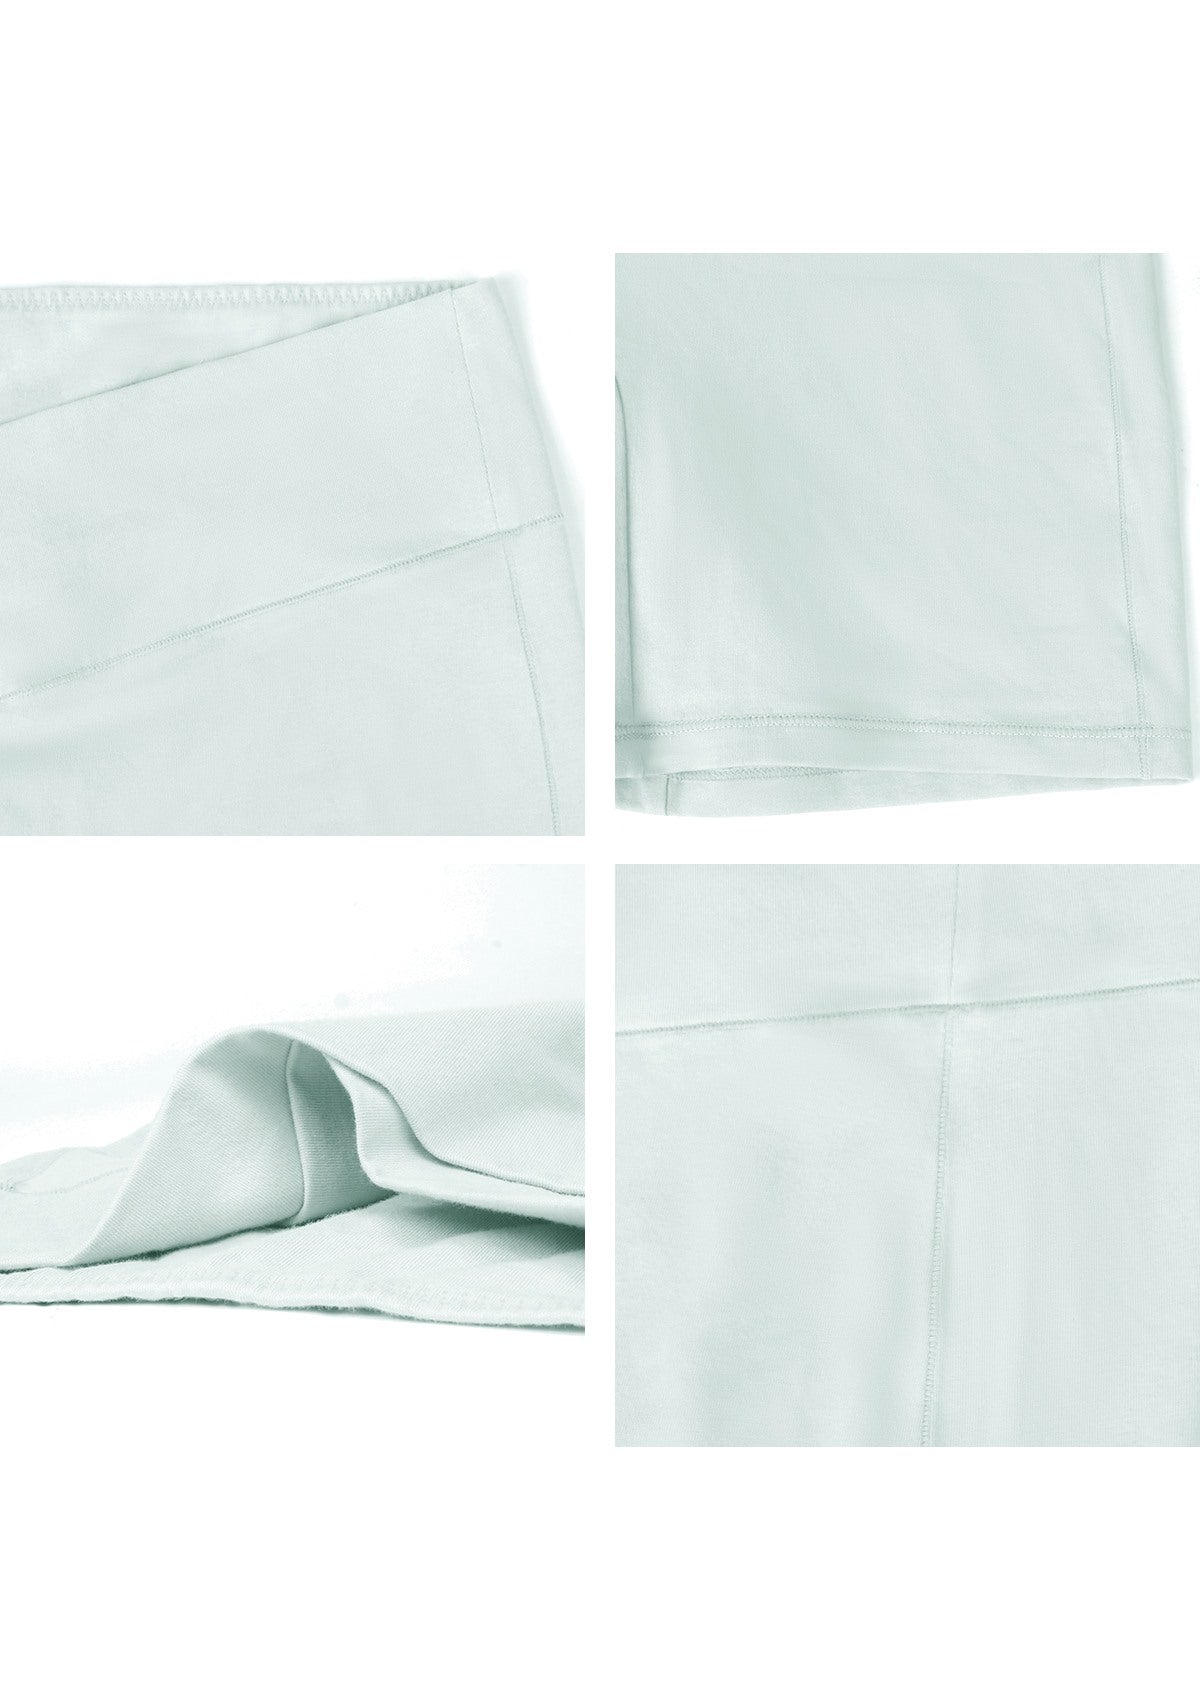 All-Day Comfort High-Rise Cotton Boyshorts Underwear 3 Pack - M / Black+Beige+Green